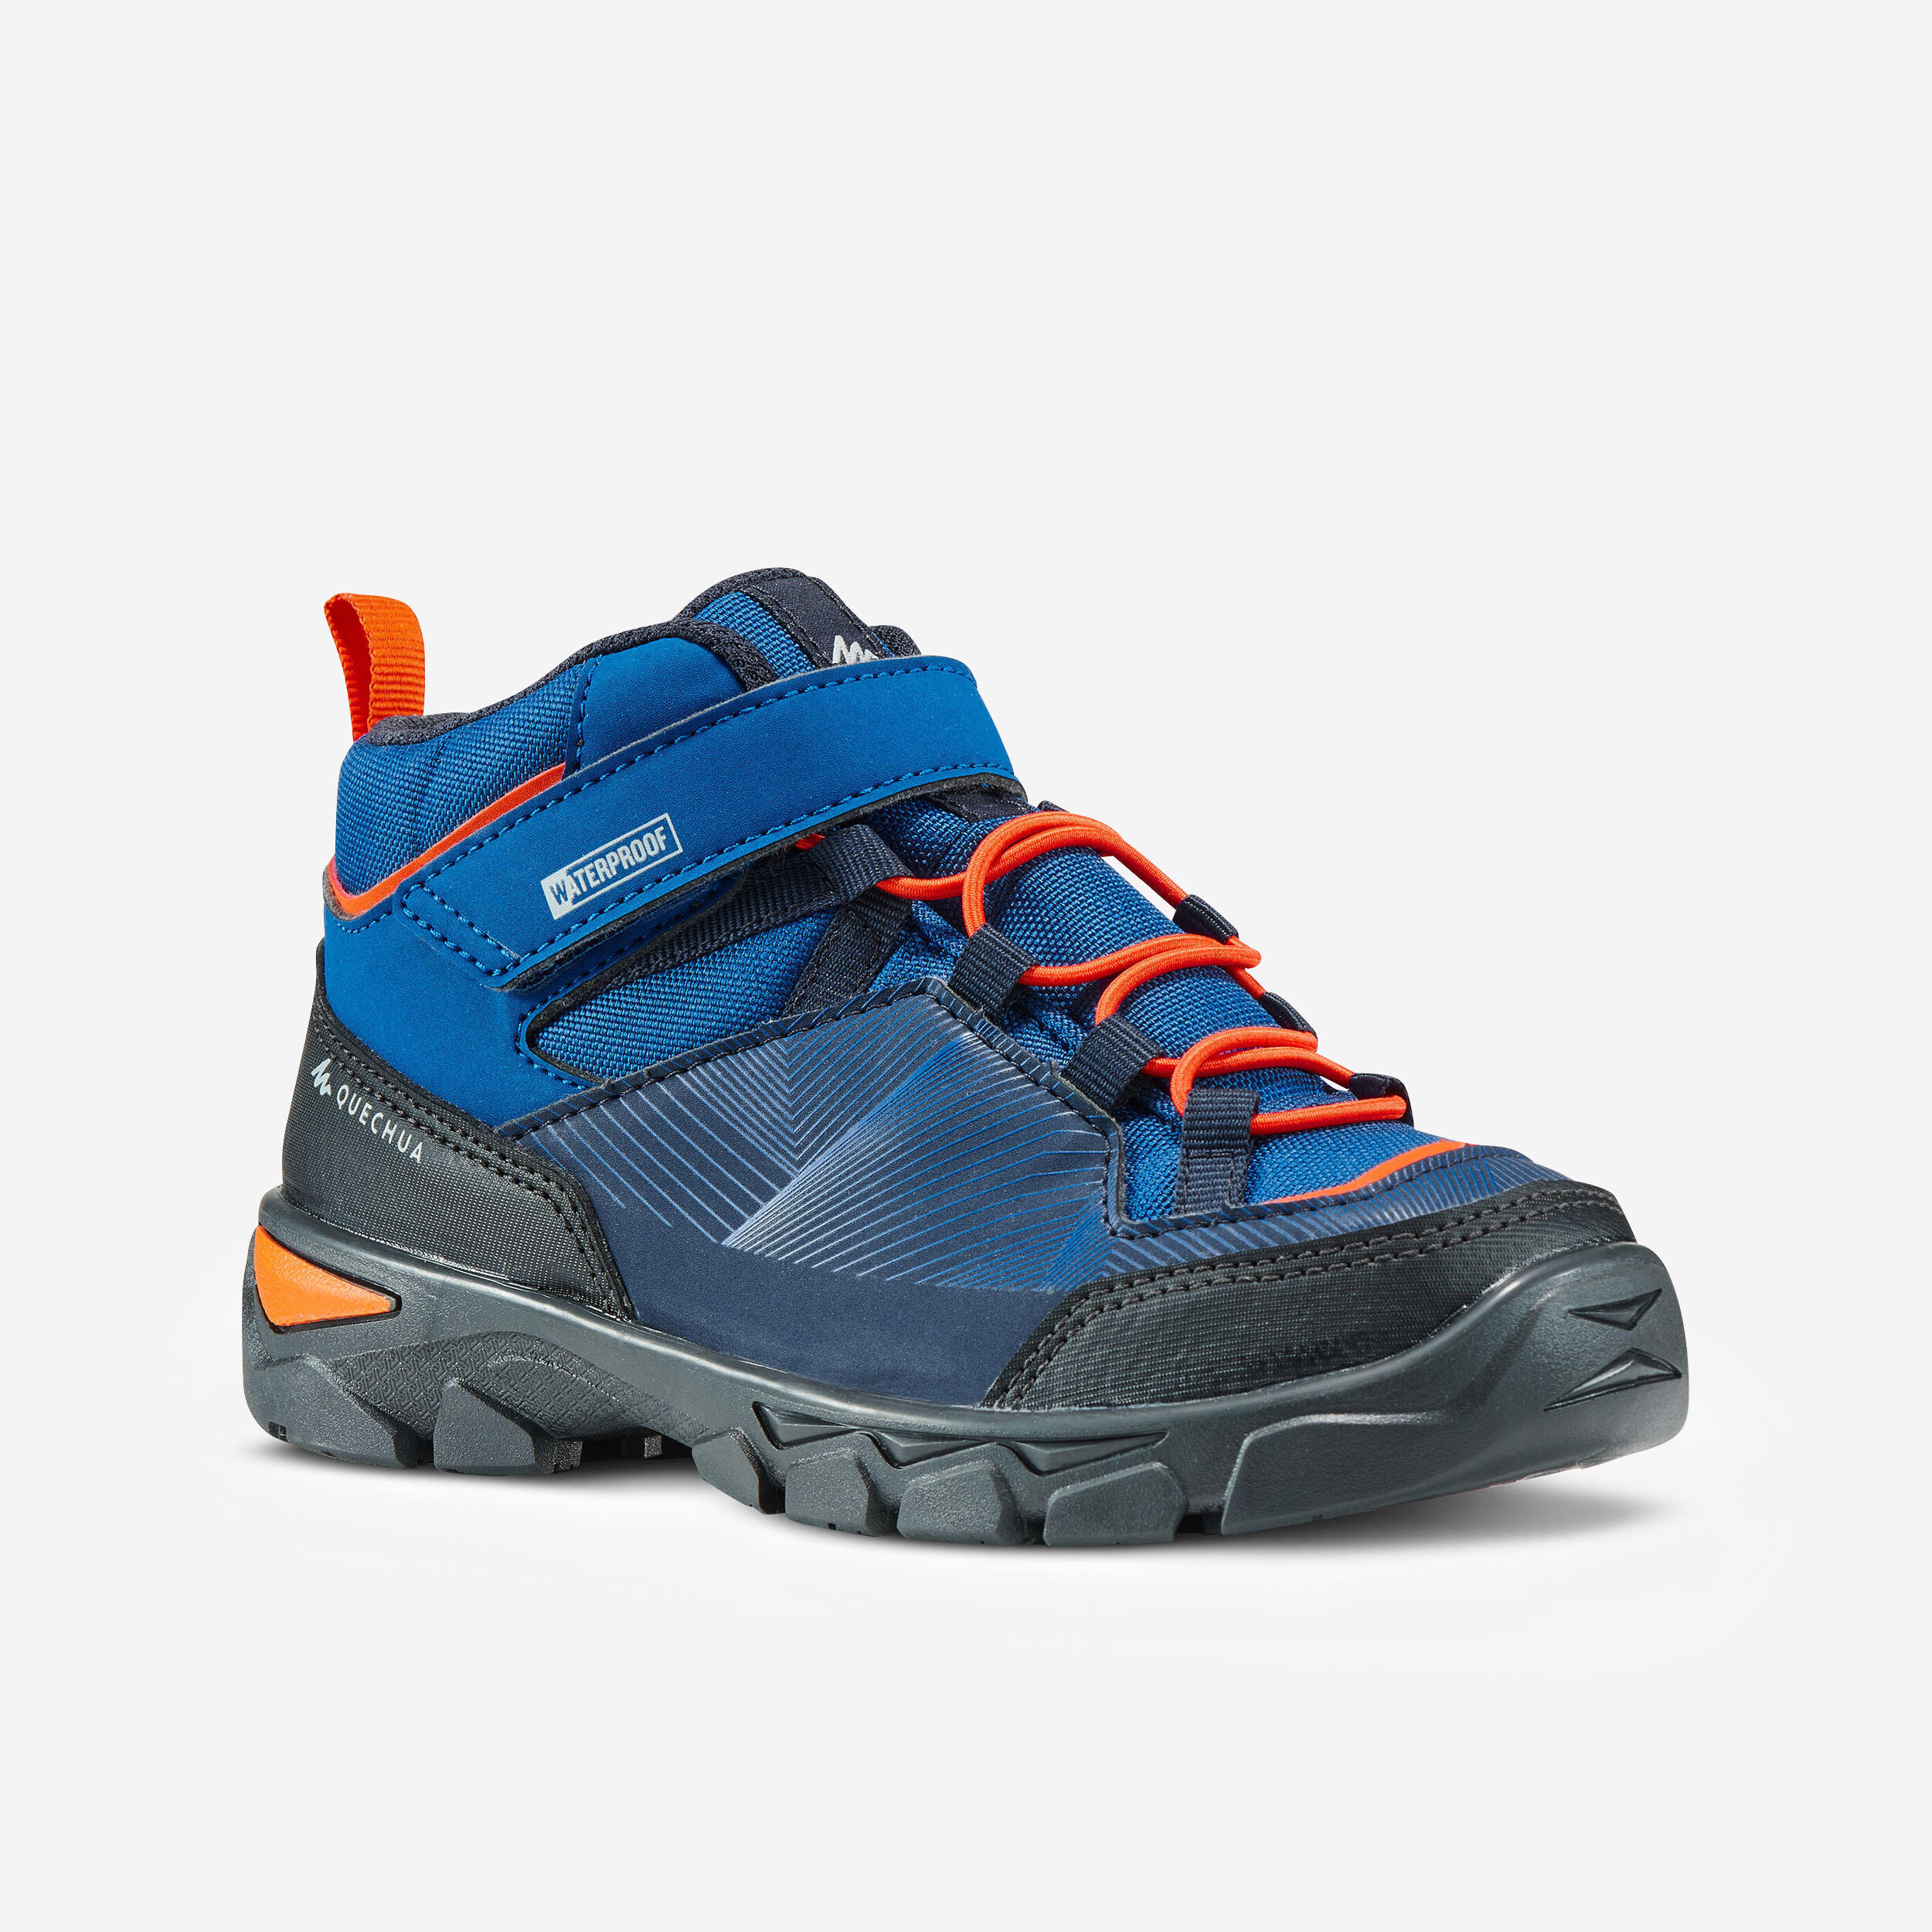 Quechua Children's Waterproof Walking Shoes - MH120 Mid Blue Size Jr. 10 Ad. 2